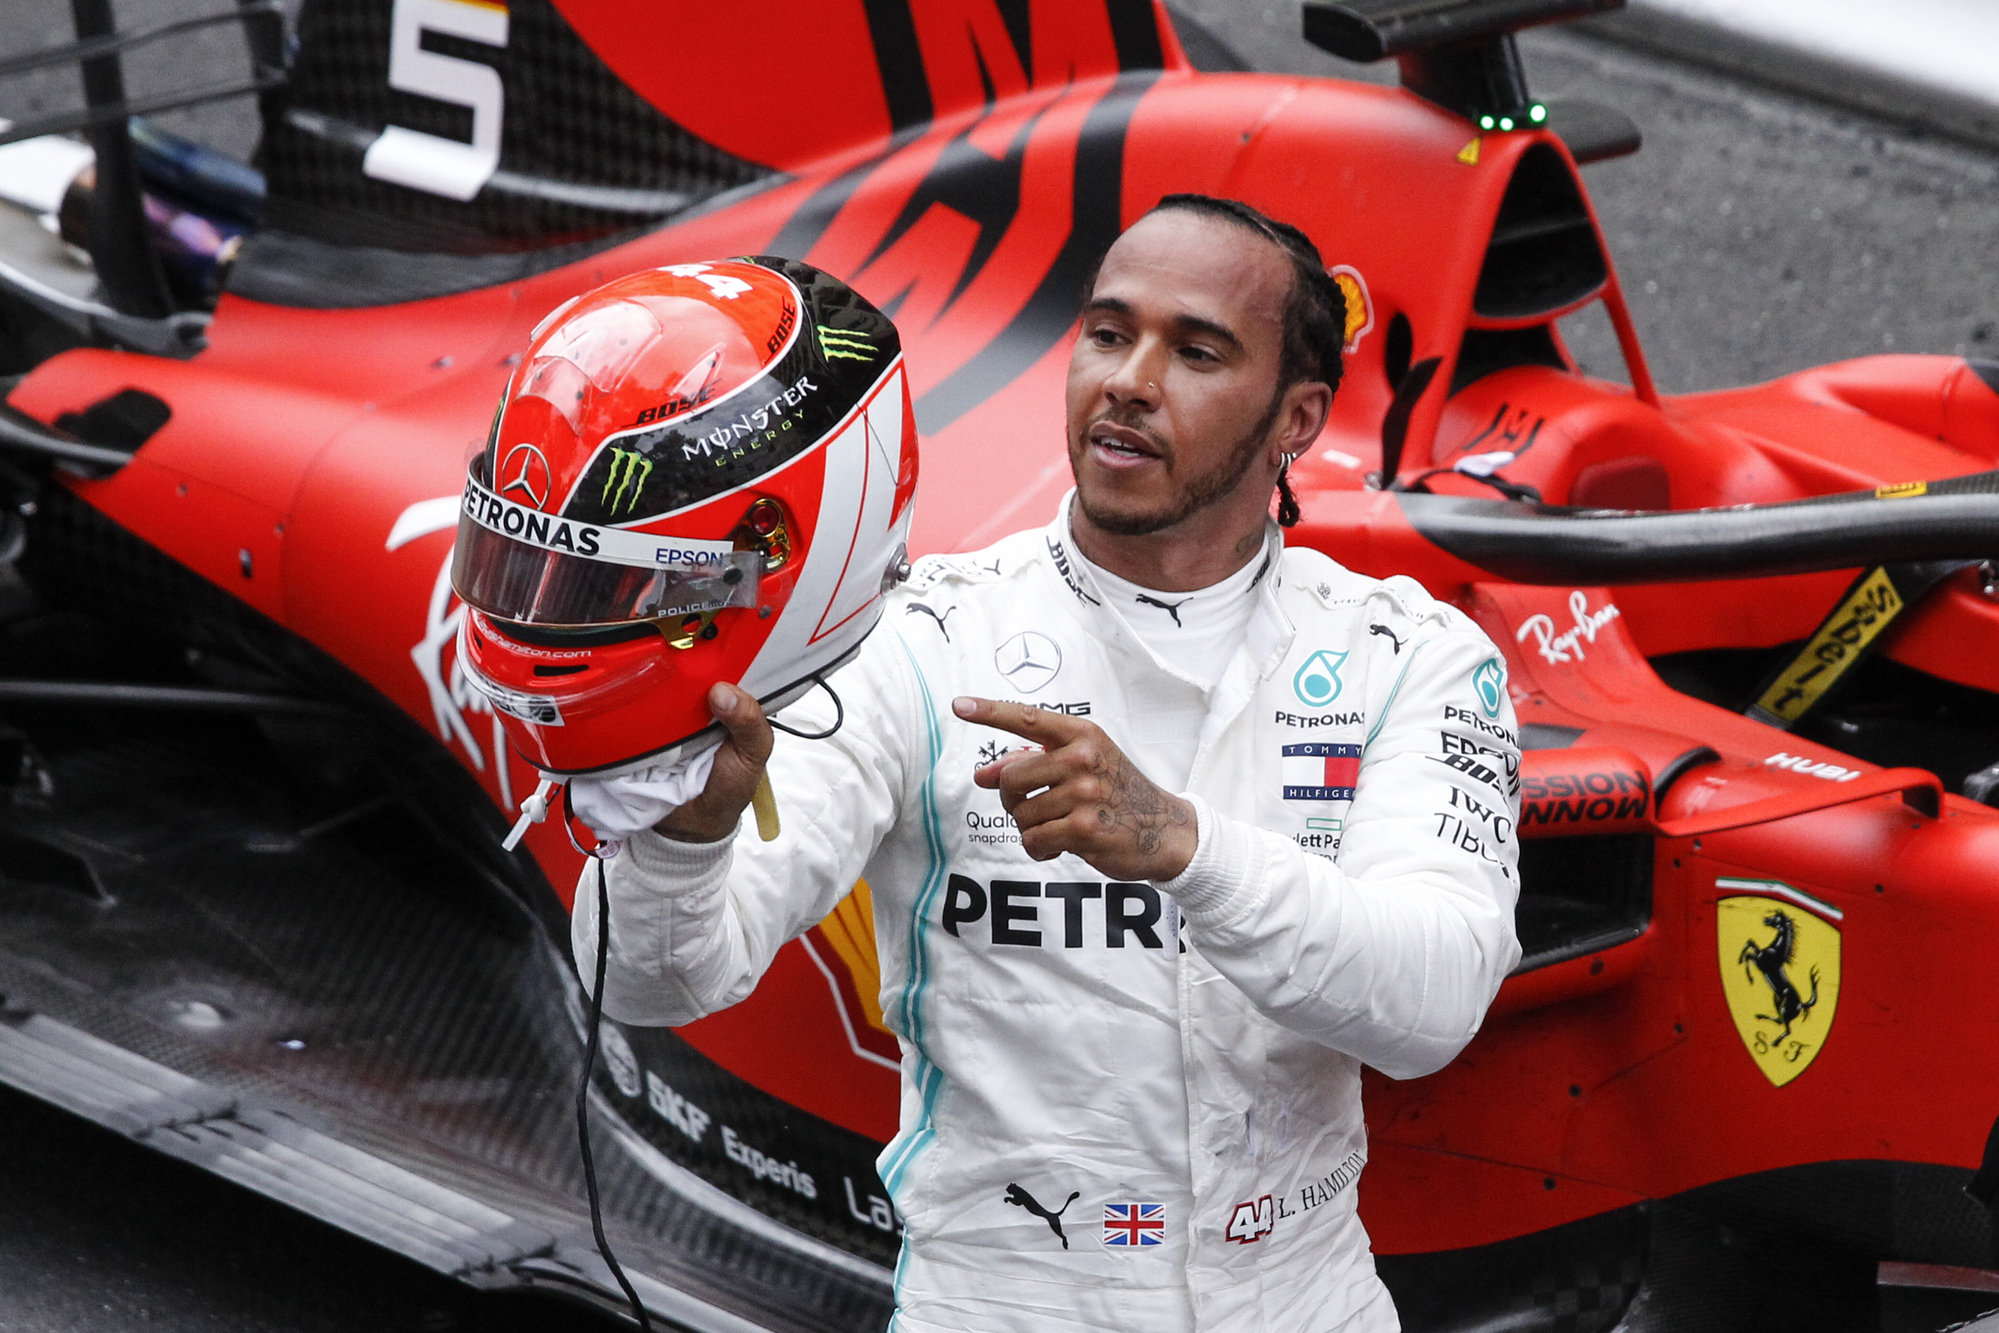 Ferrari, Lewis Hamilton